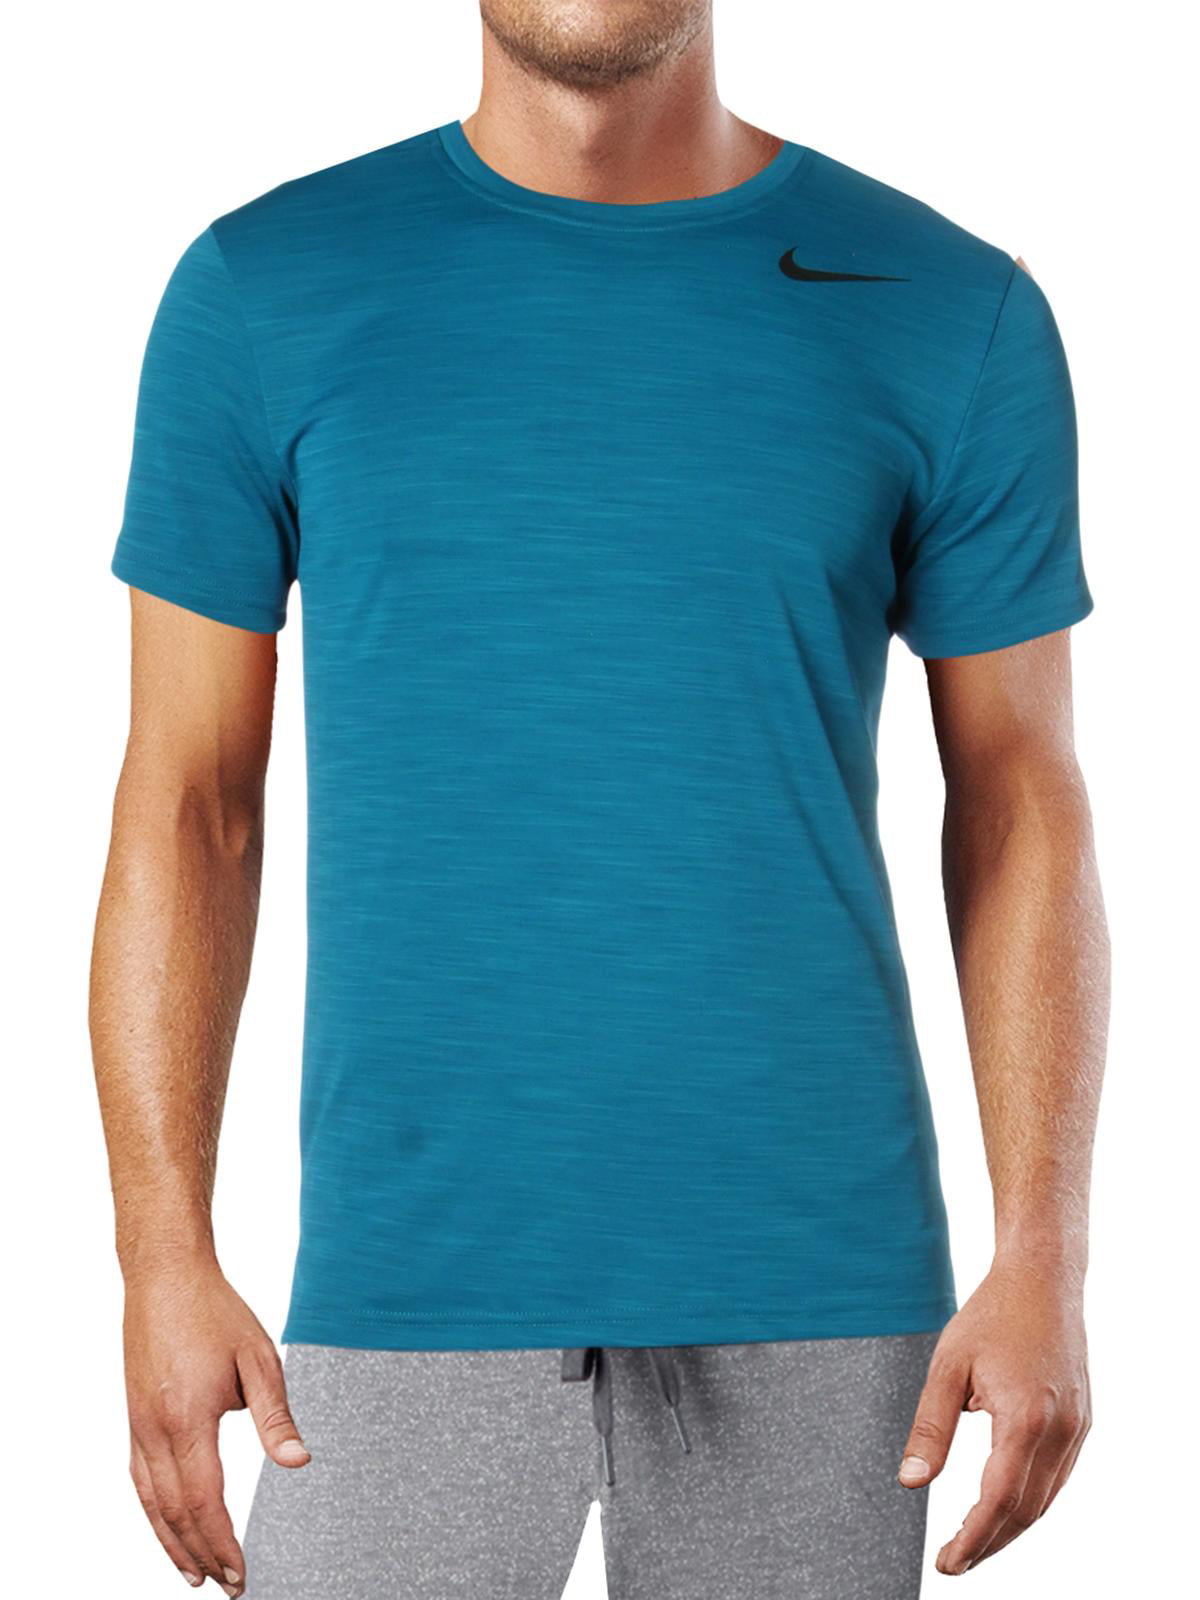 Nike Mens Training Short Sleeve T-Shirt - Walmart.com